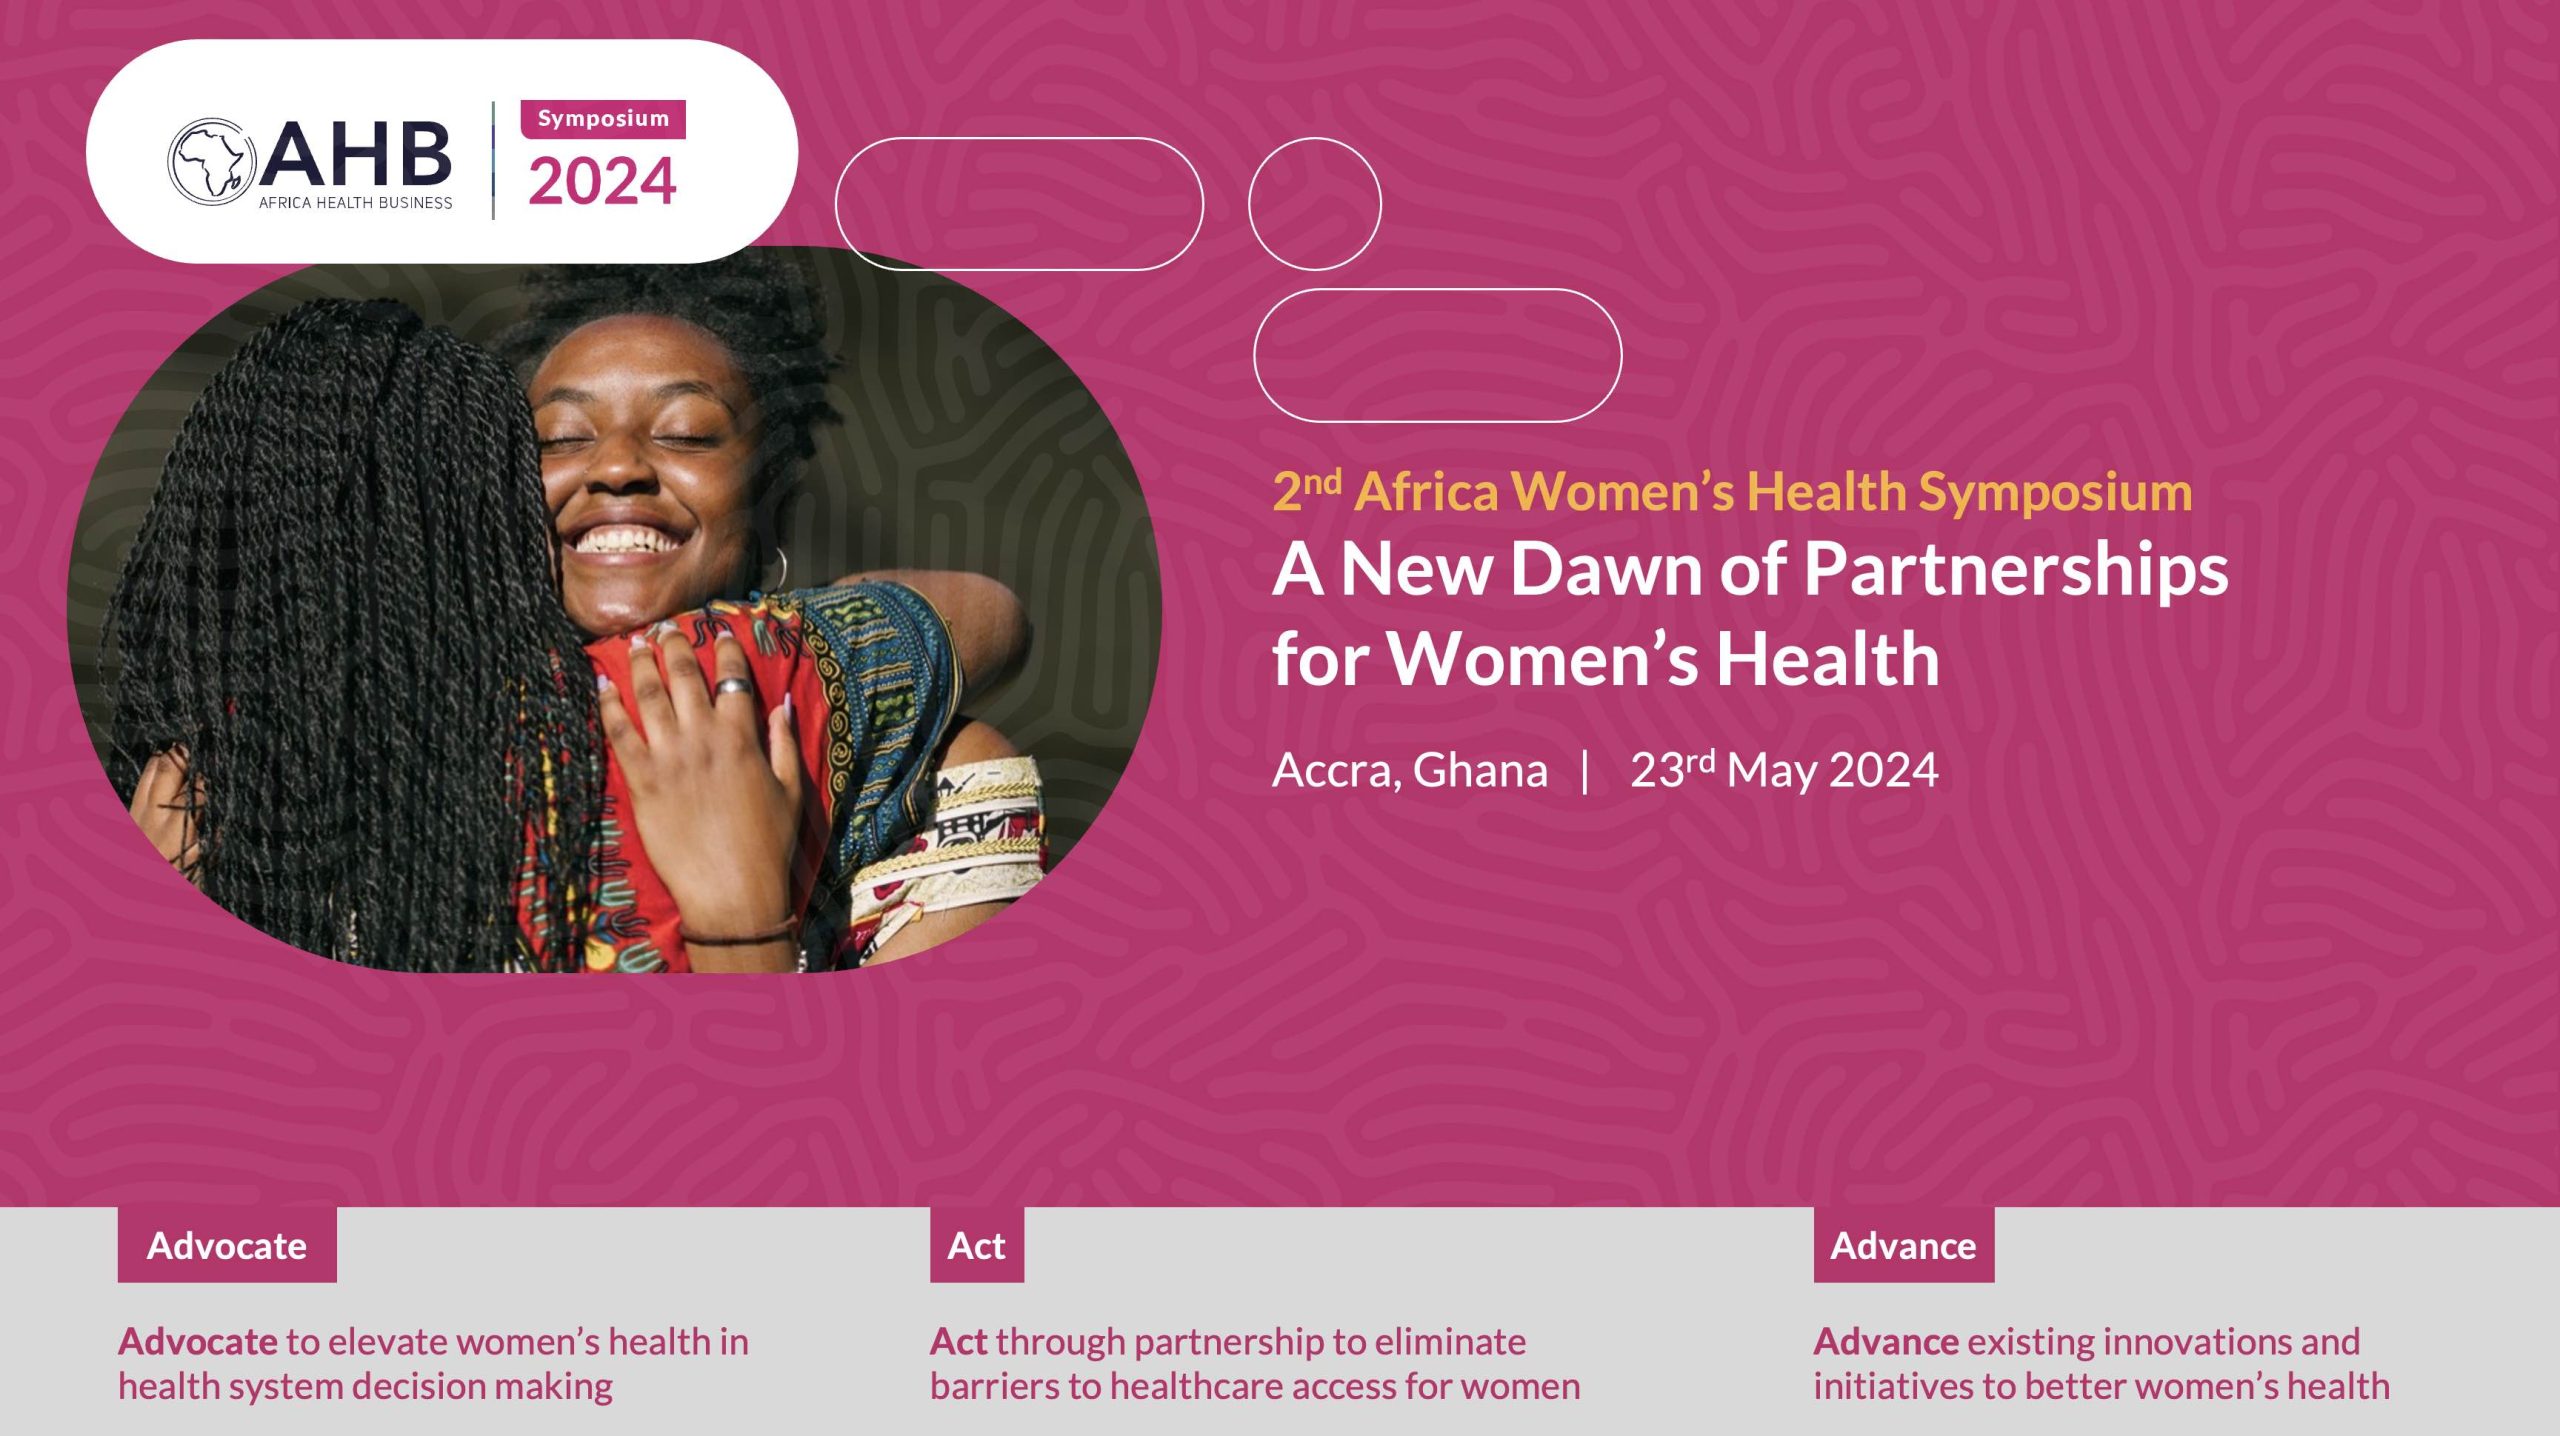 2nd Africa Women's Health